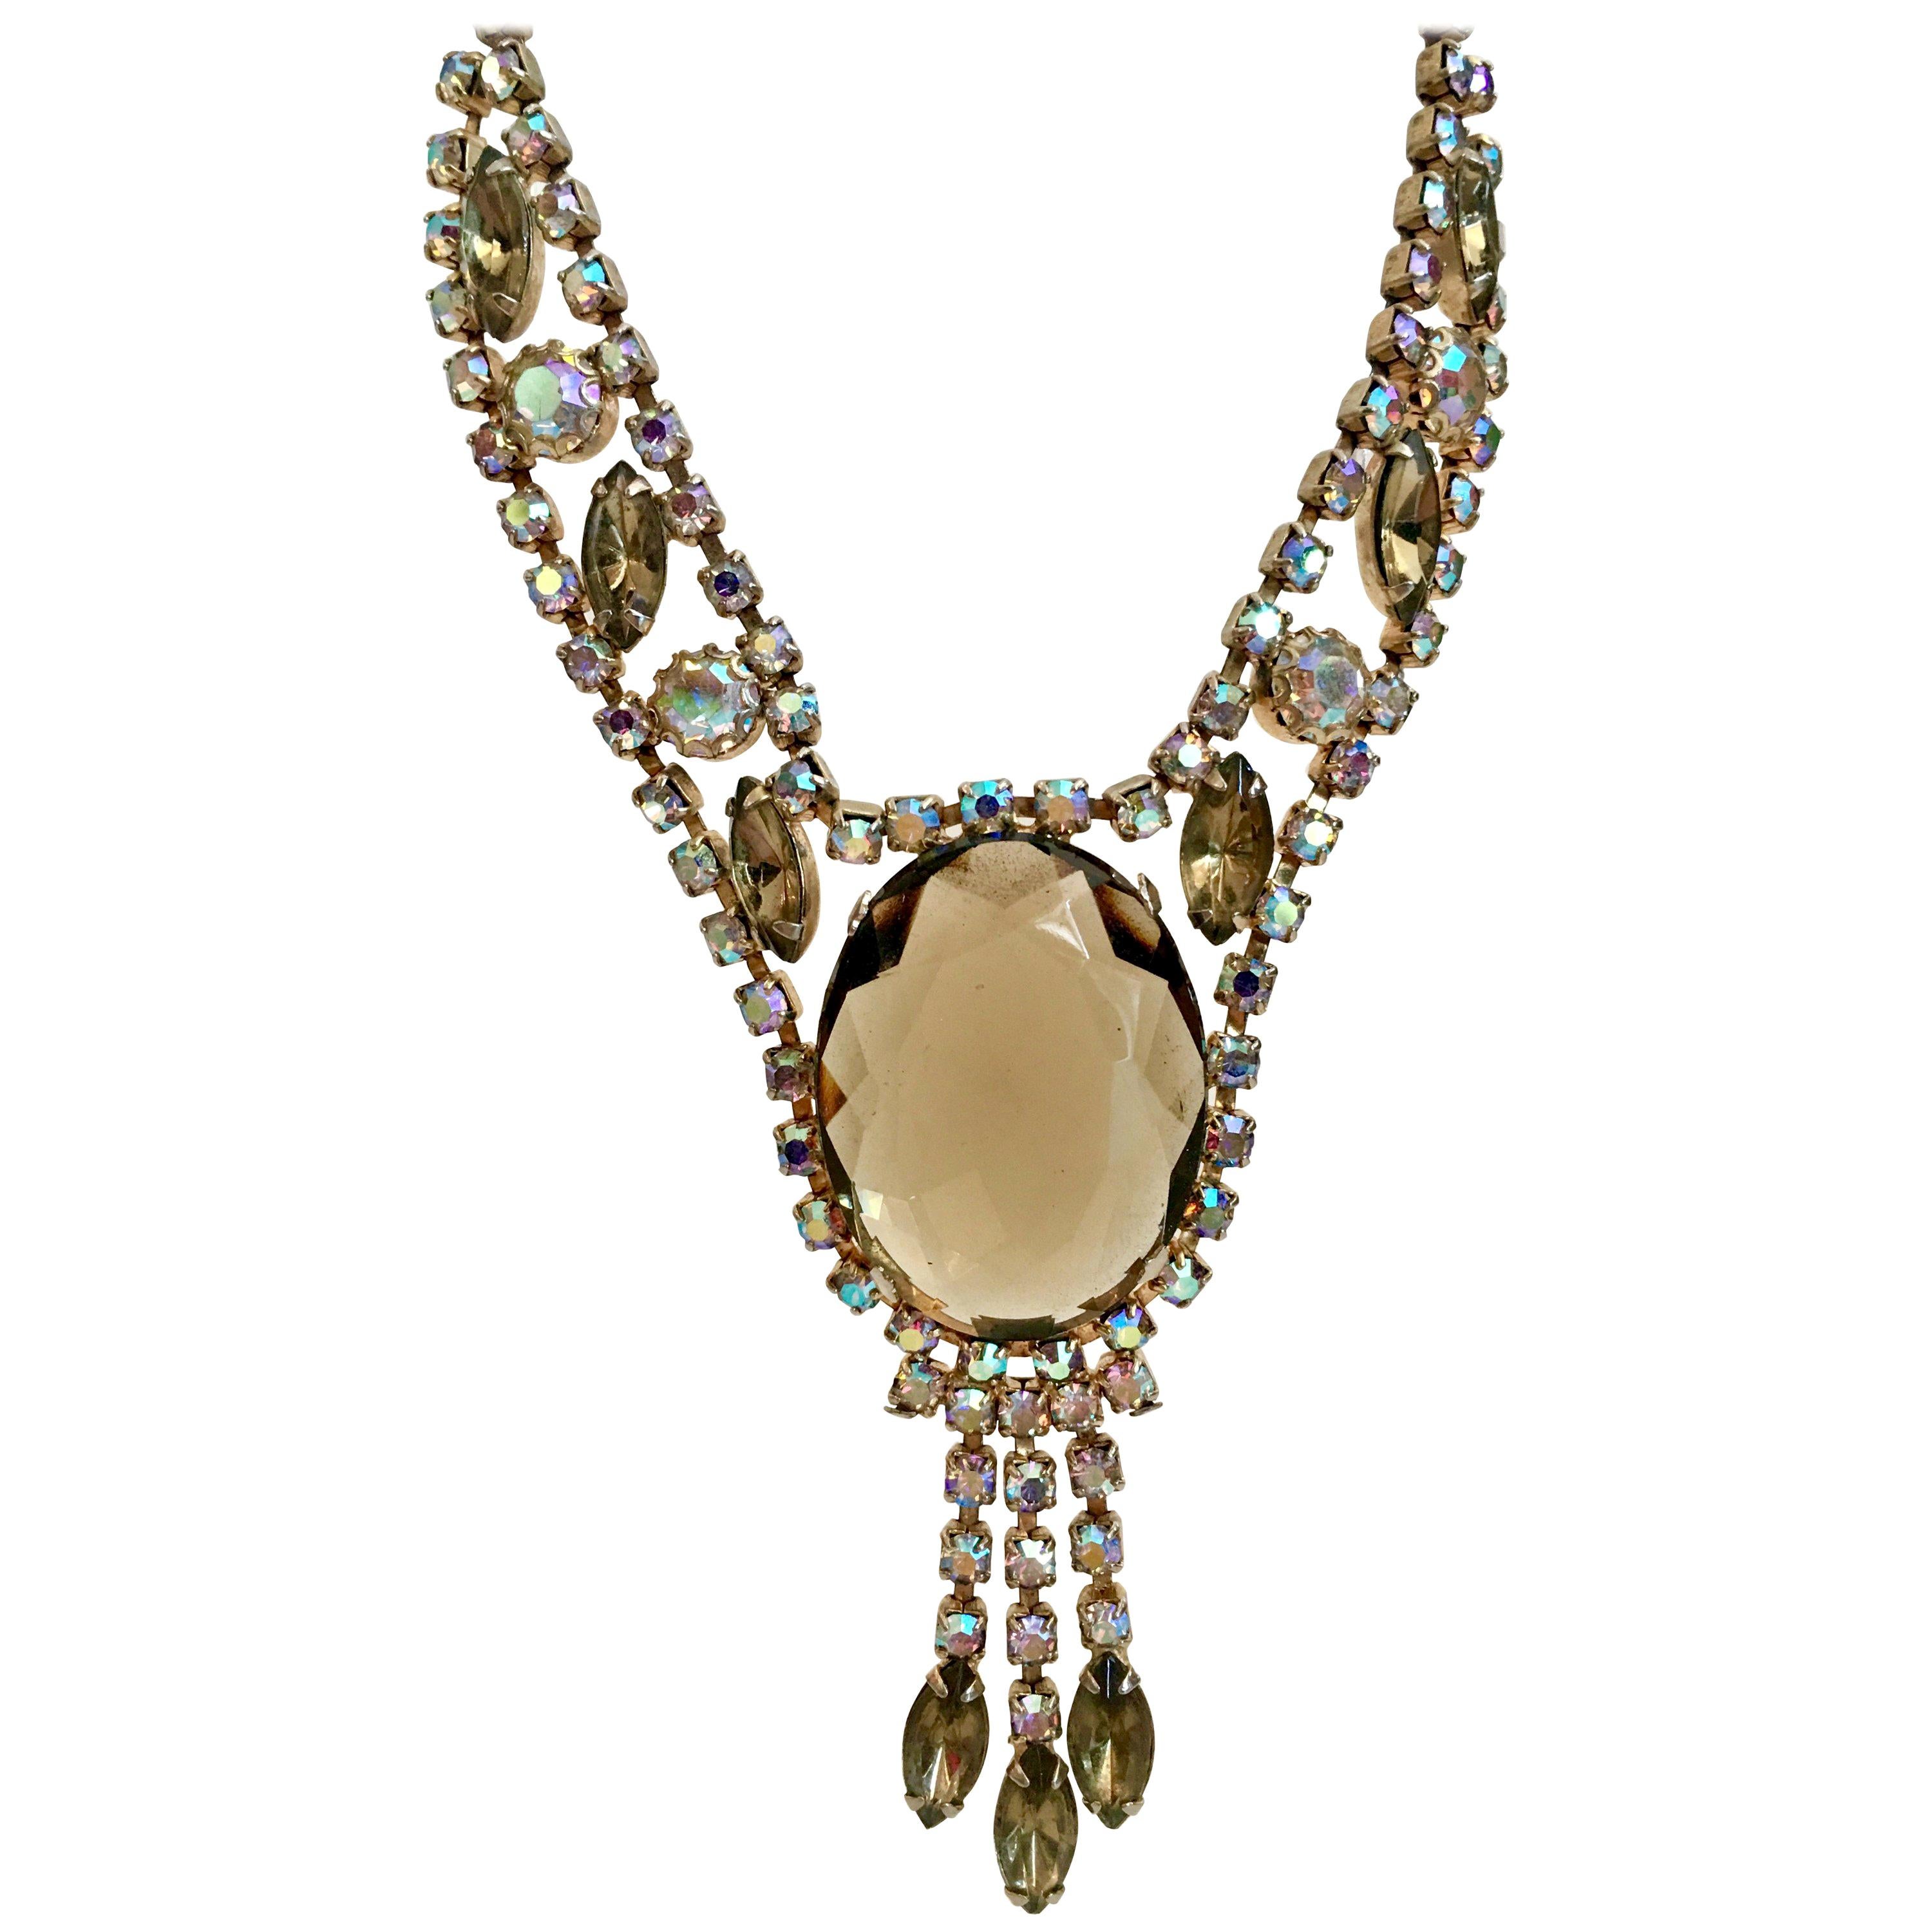 20th Century Gold & Austrian Crystal "Juliana" Style Necklace